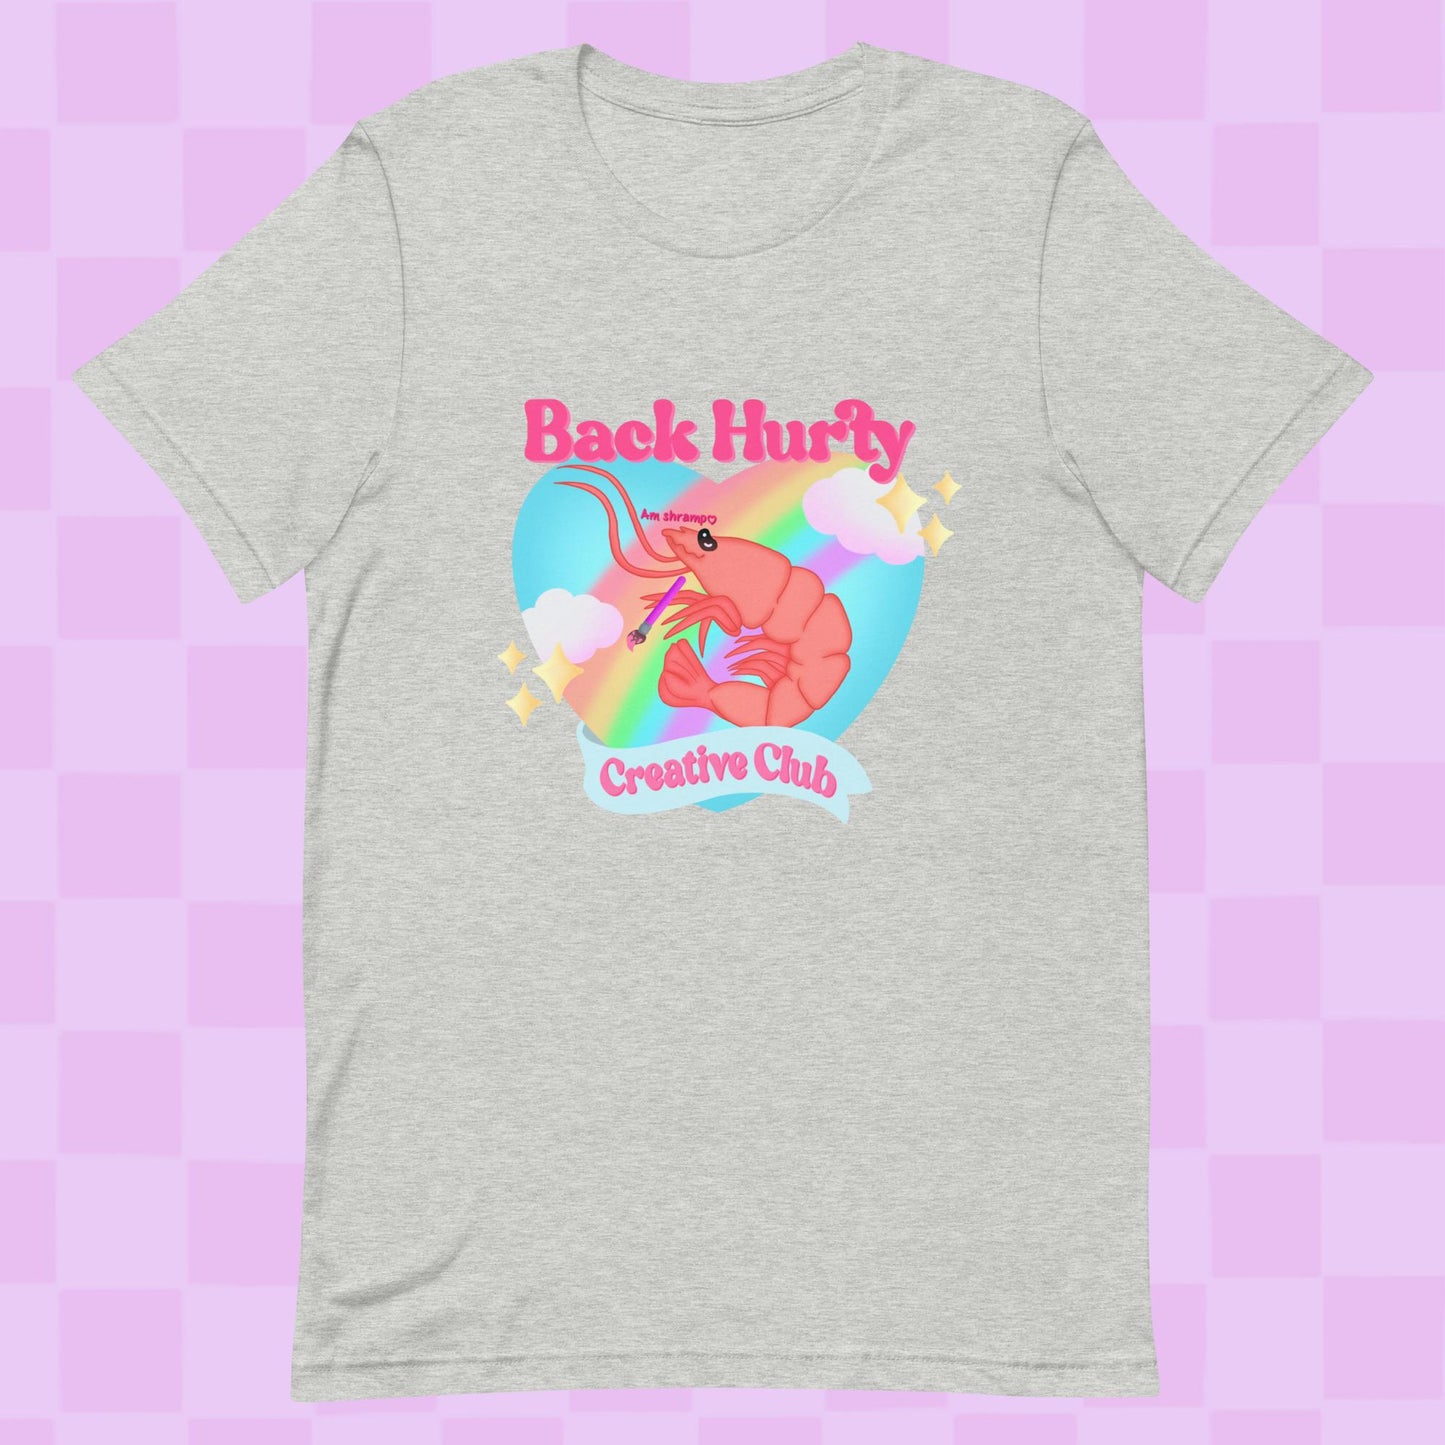 Back hurty creative club unisex t-shirt